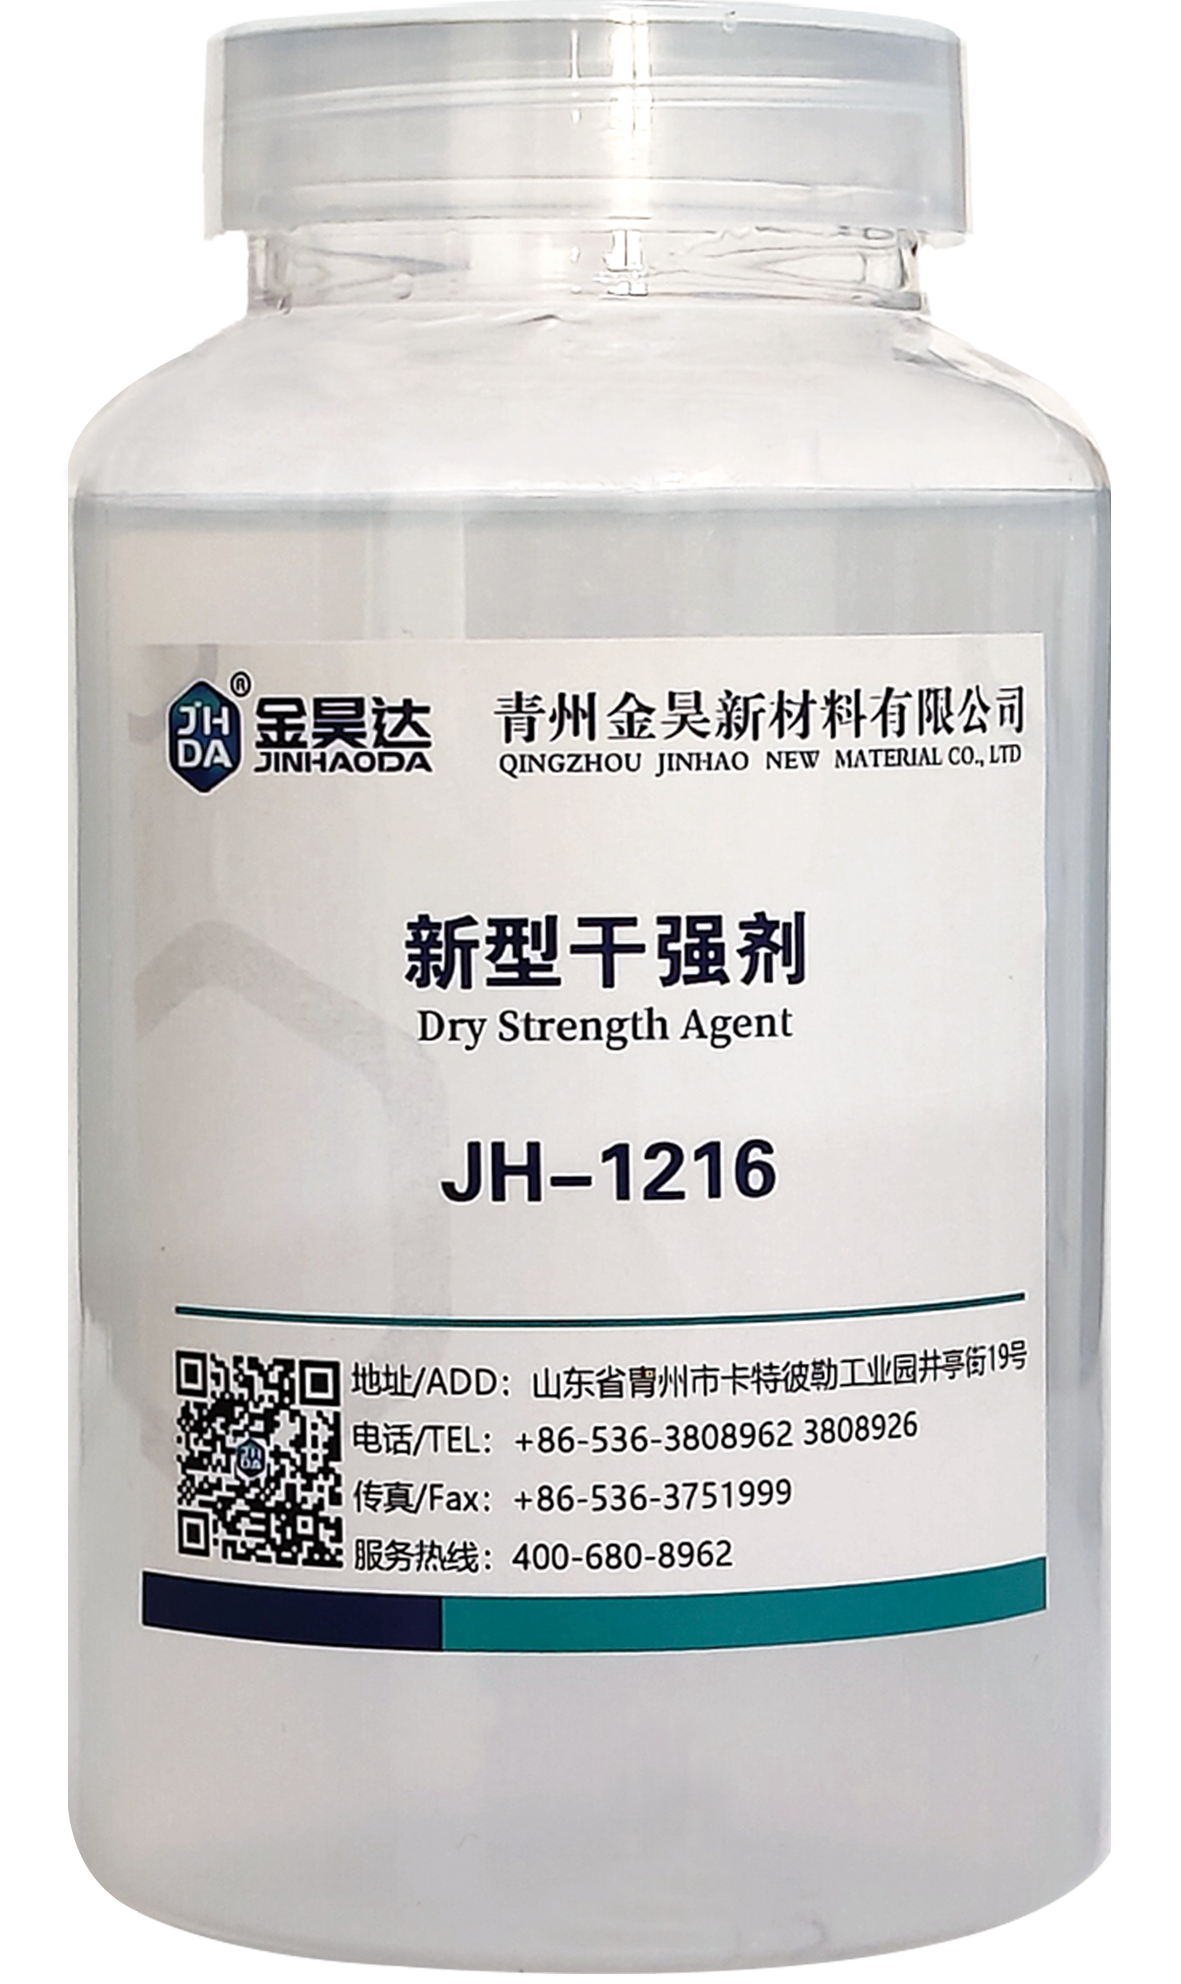 JH-1216新型干强剂